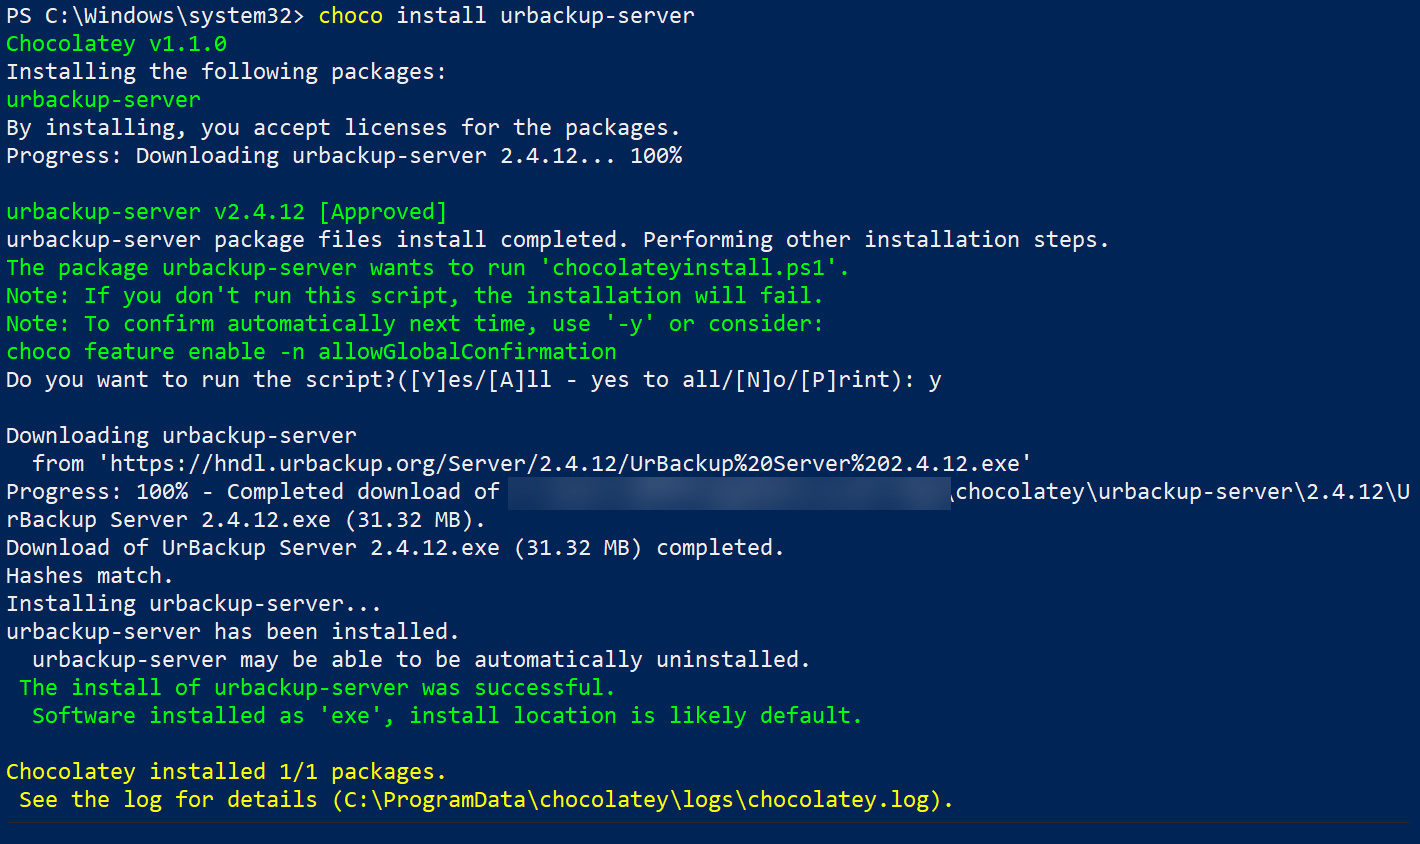 Downloading and installing the UrBackup server via PowerShell